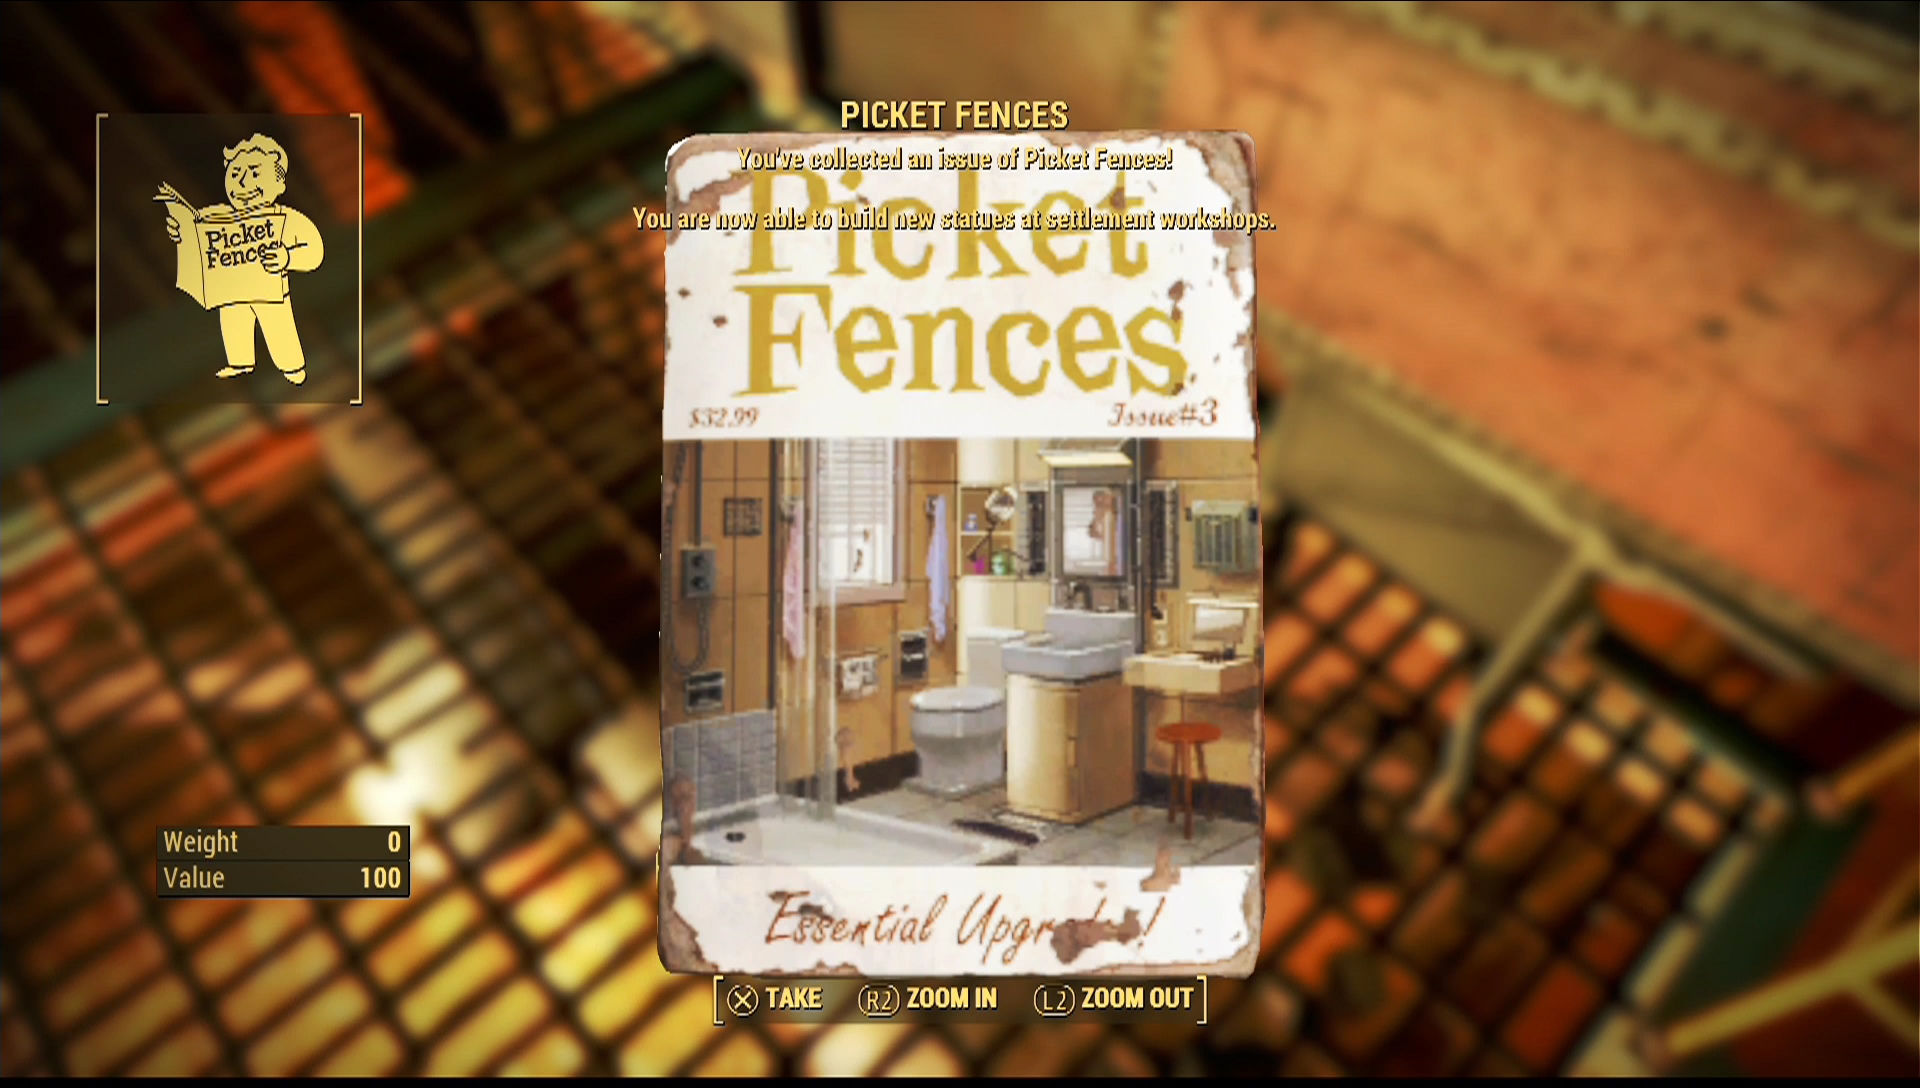 fences 3 free key